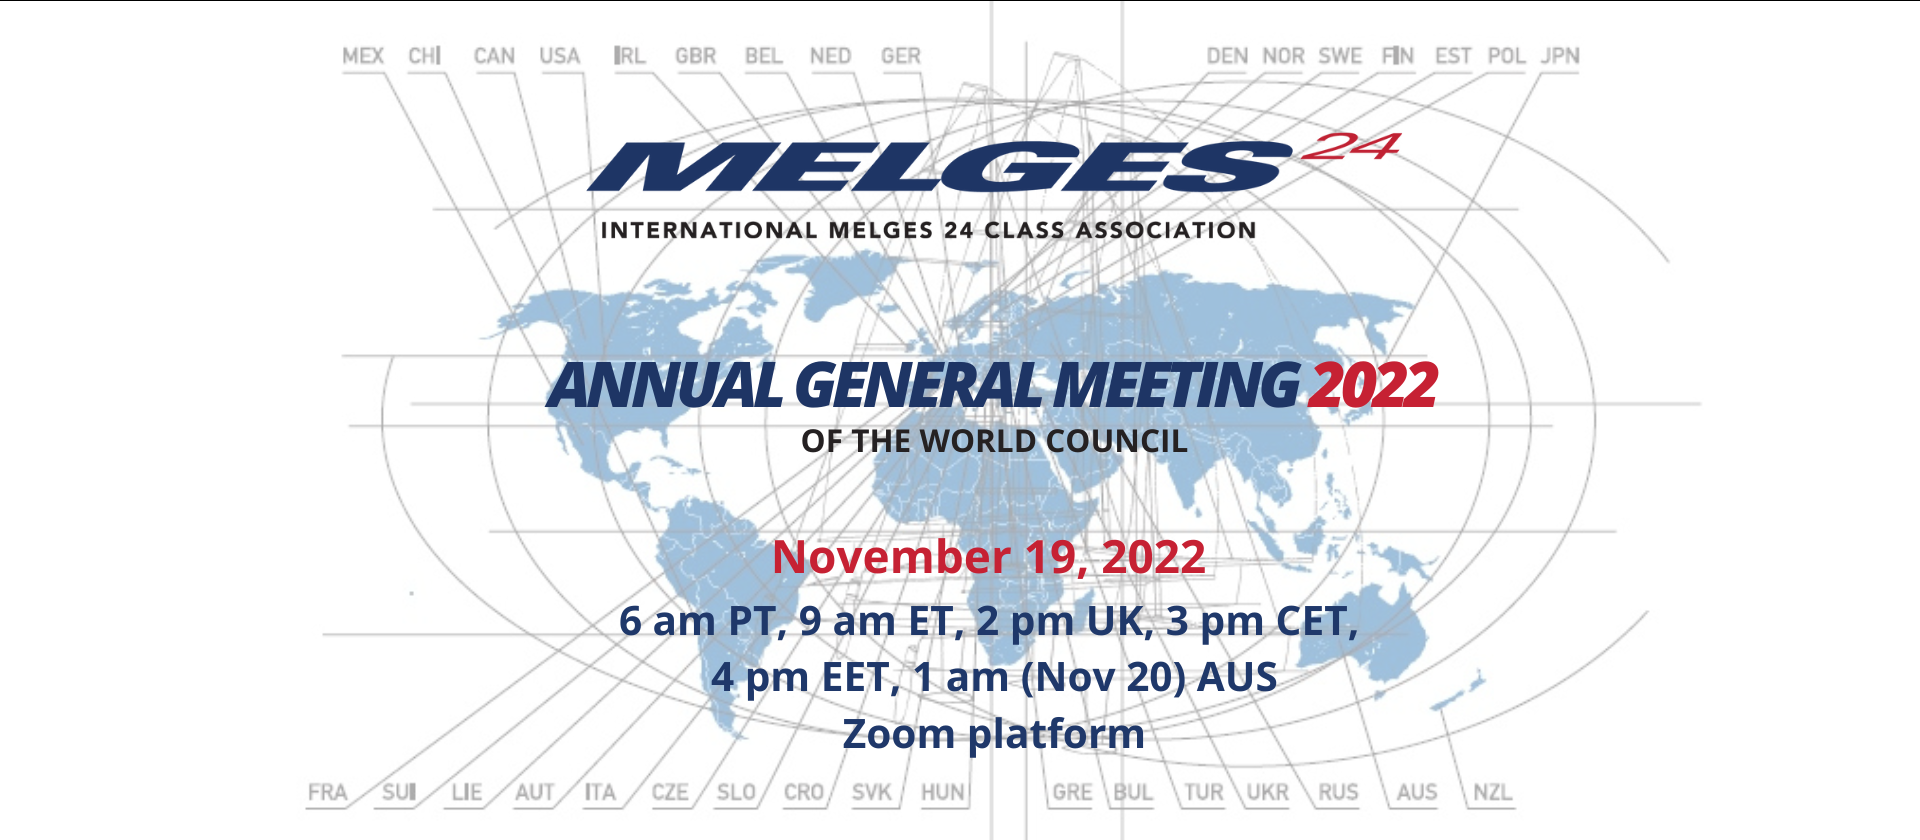 2022 International Melges 24 World Council Annual General Meeting